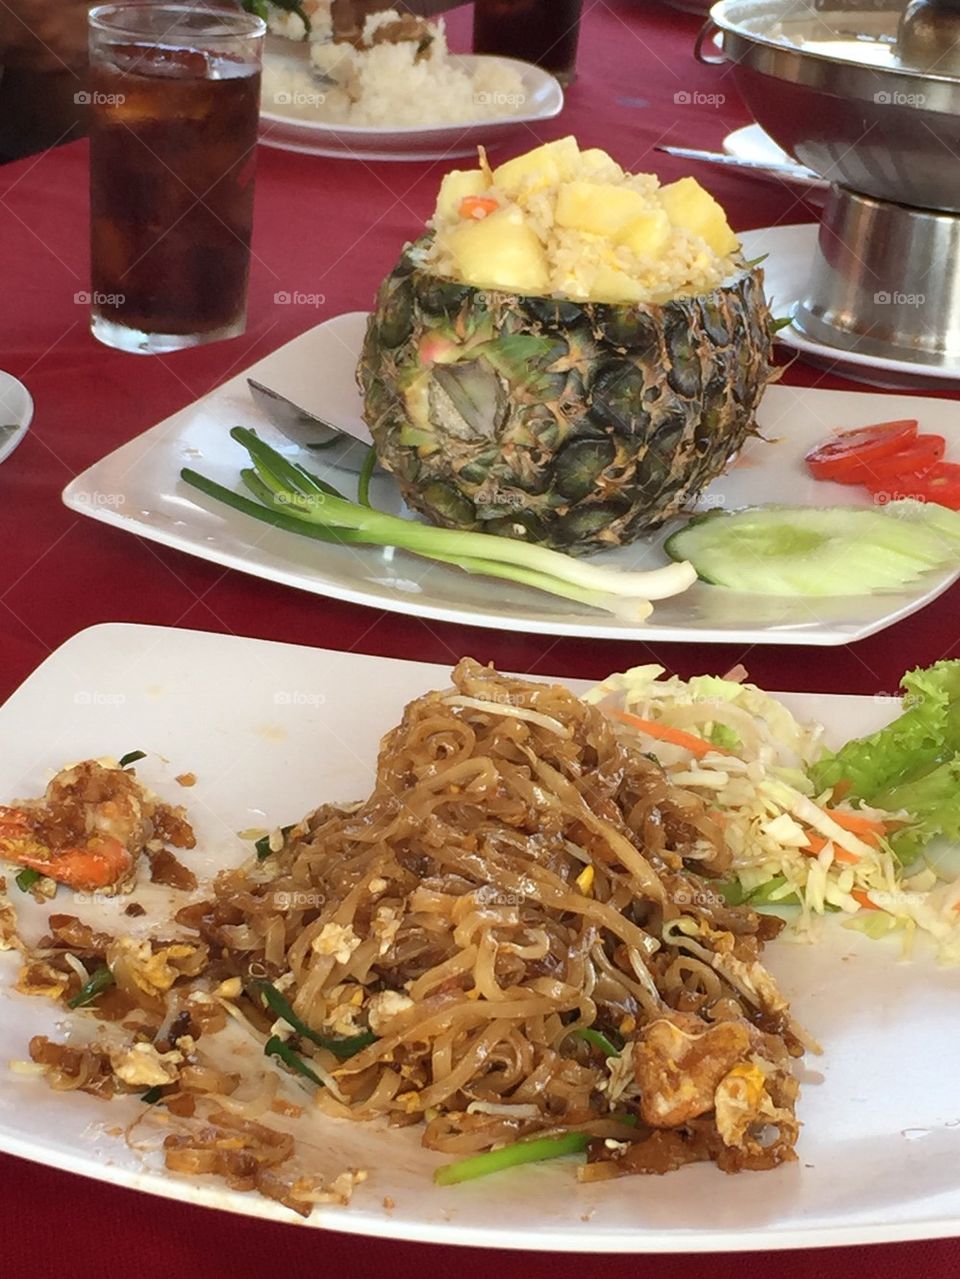 Thai lunch